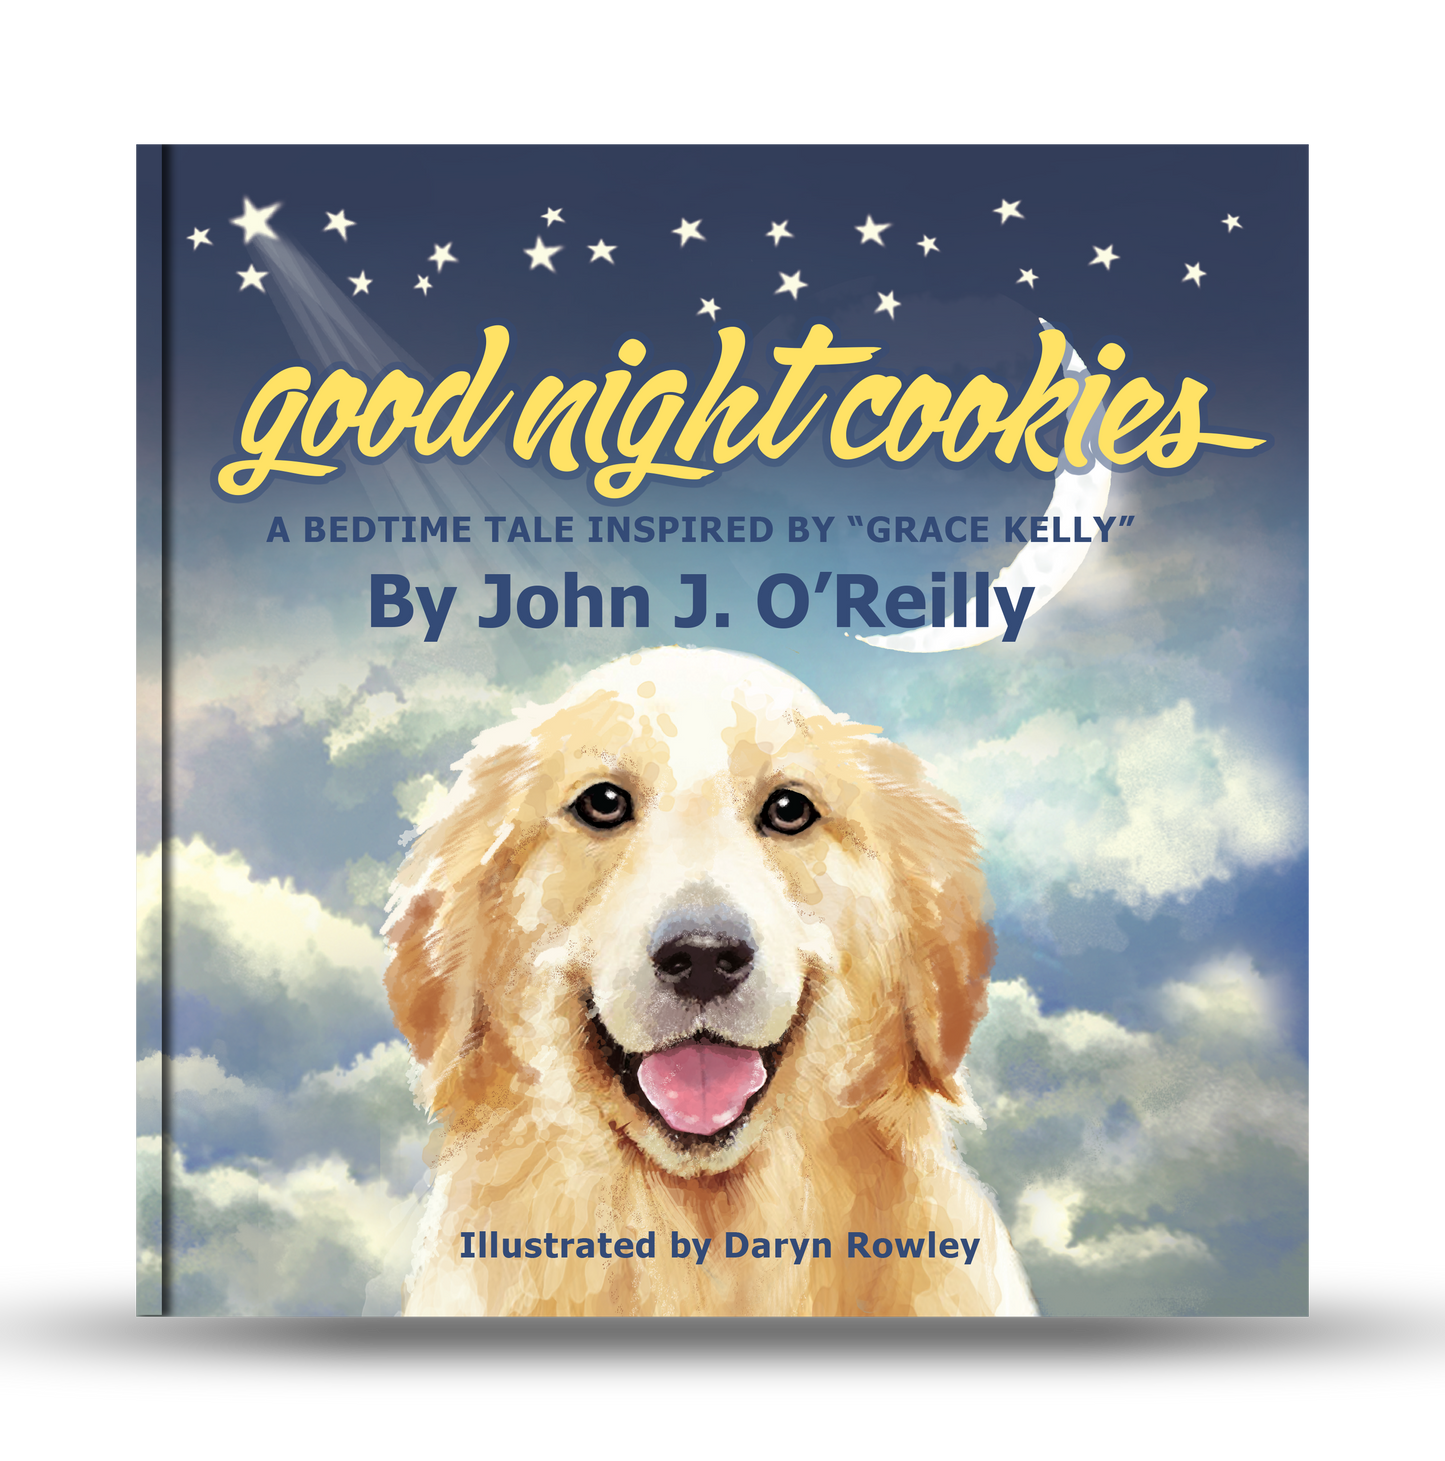 Good Night Cookies by John J. O'Reilly